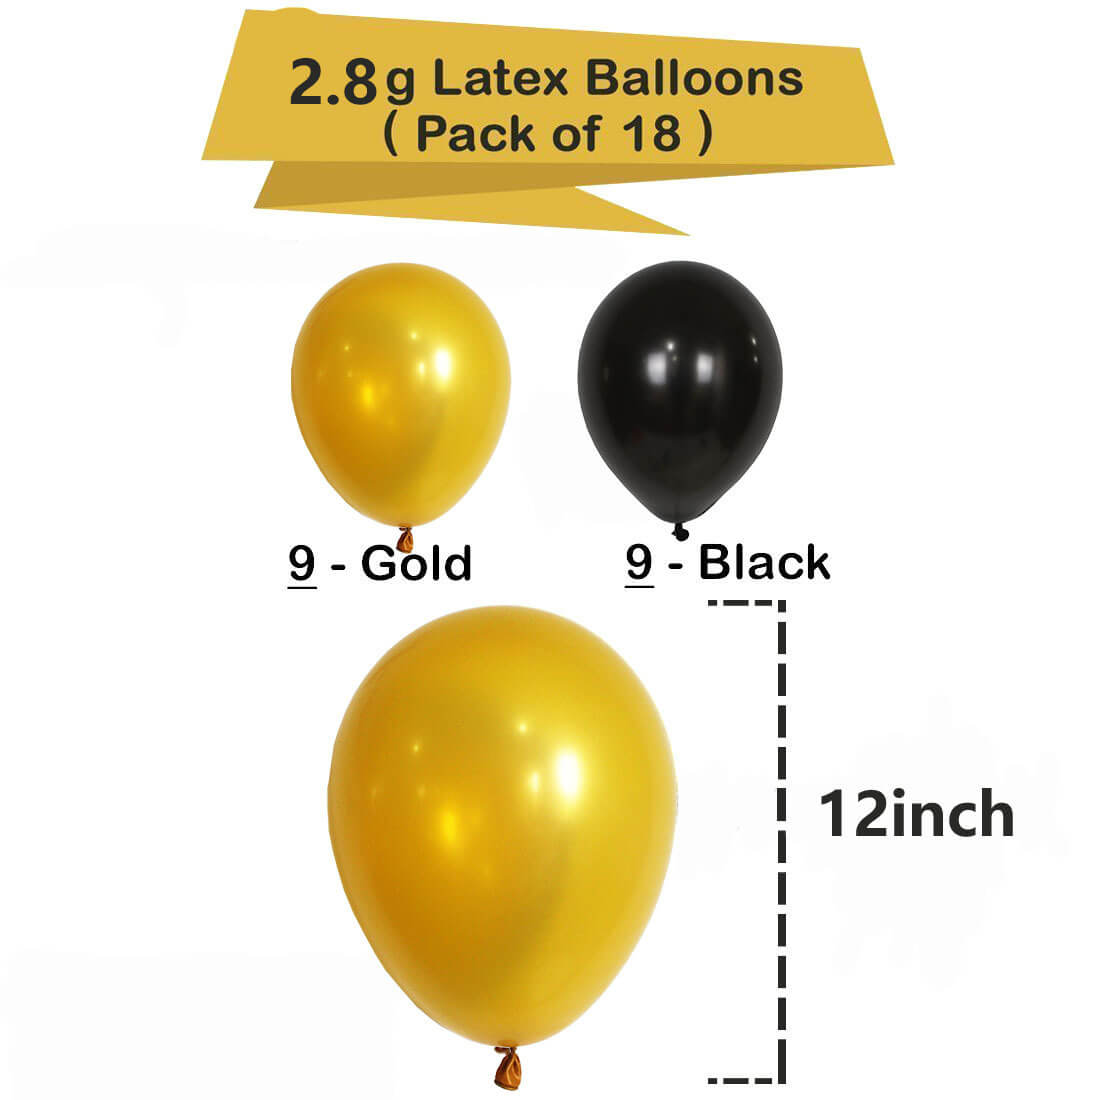 Black Gold Aluminum Film Balloon with Paper Flowers Kit 2021 Graduation Festival Party Decoration-ueventsupplies